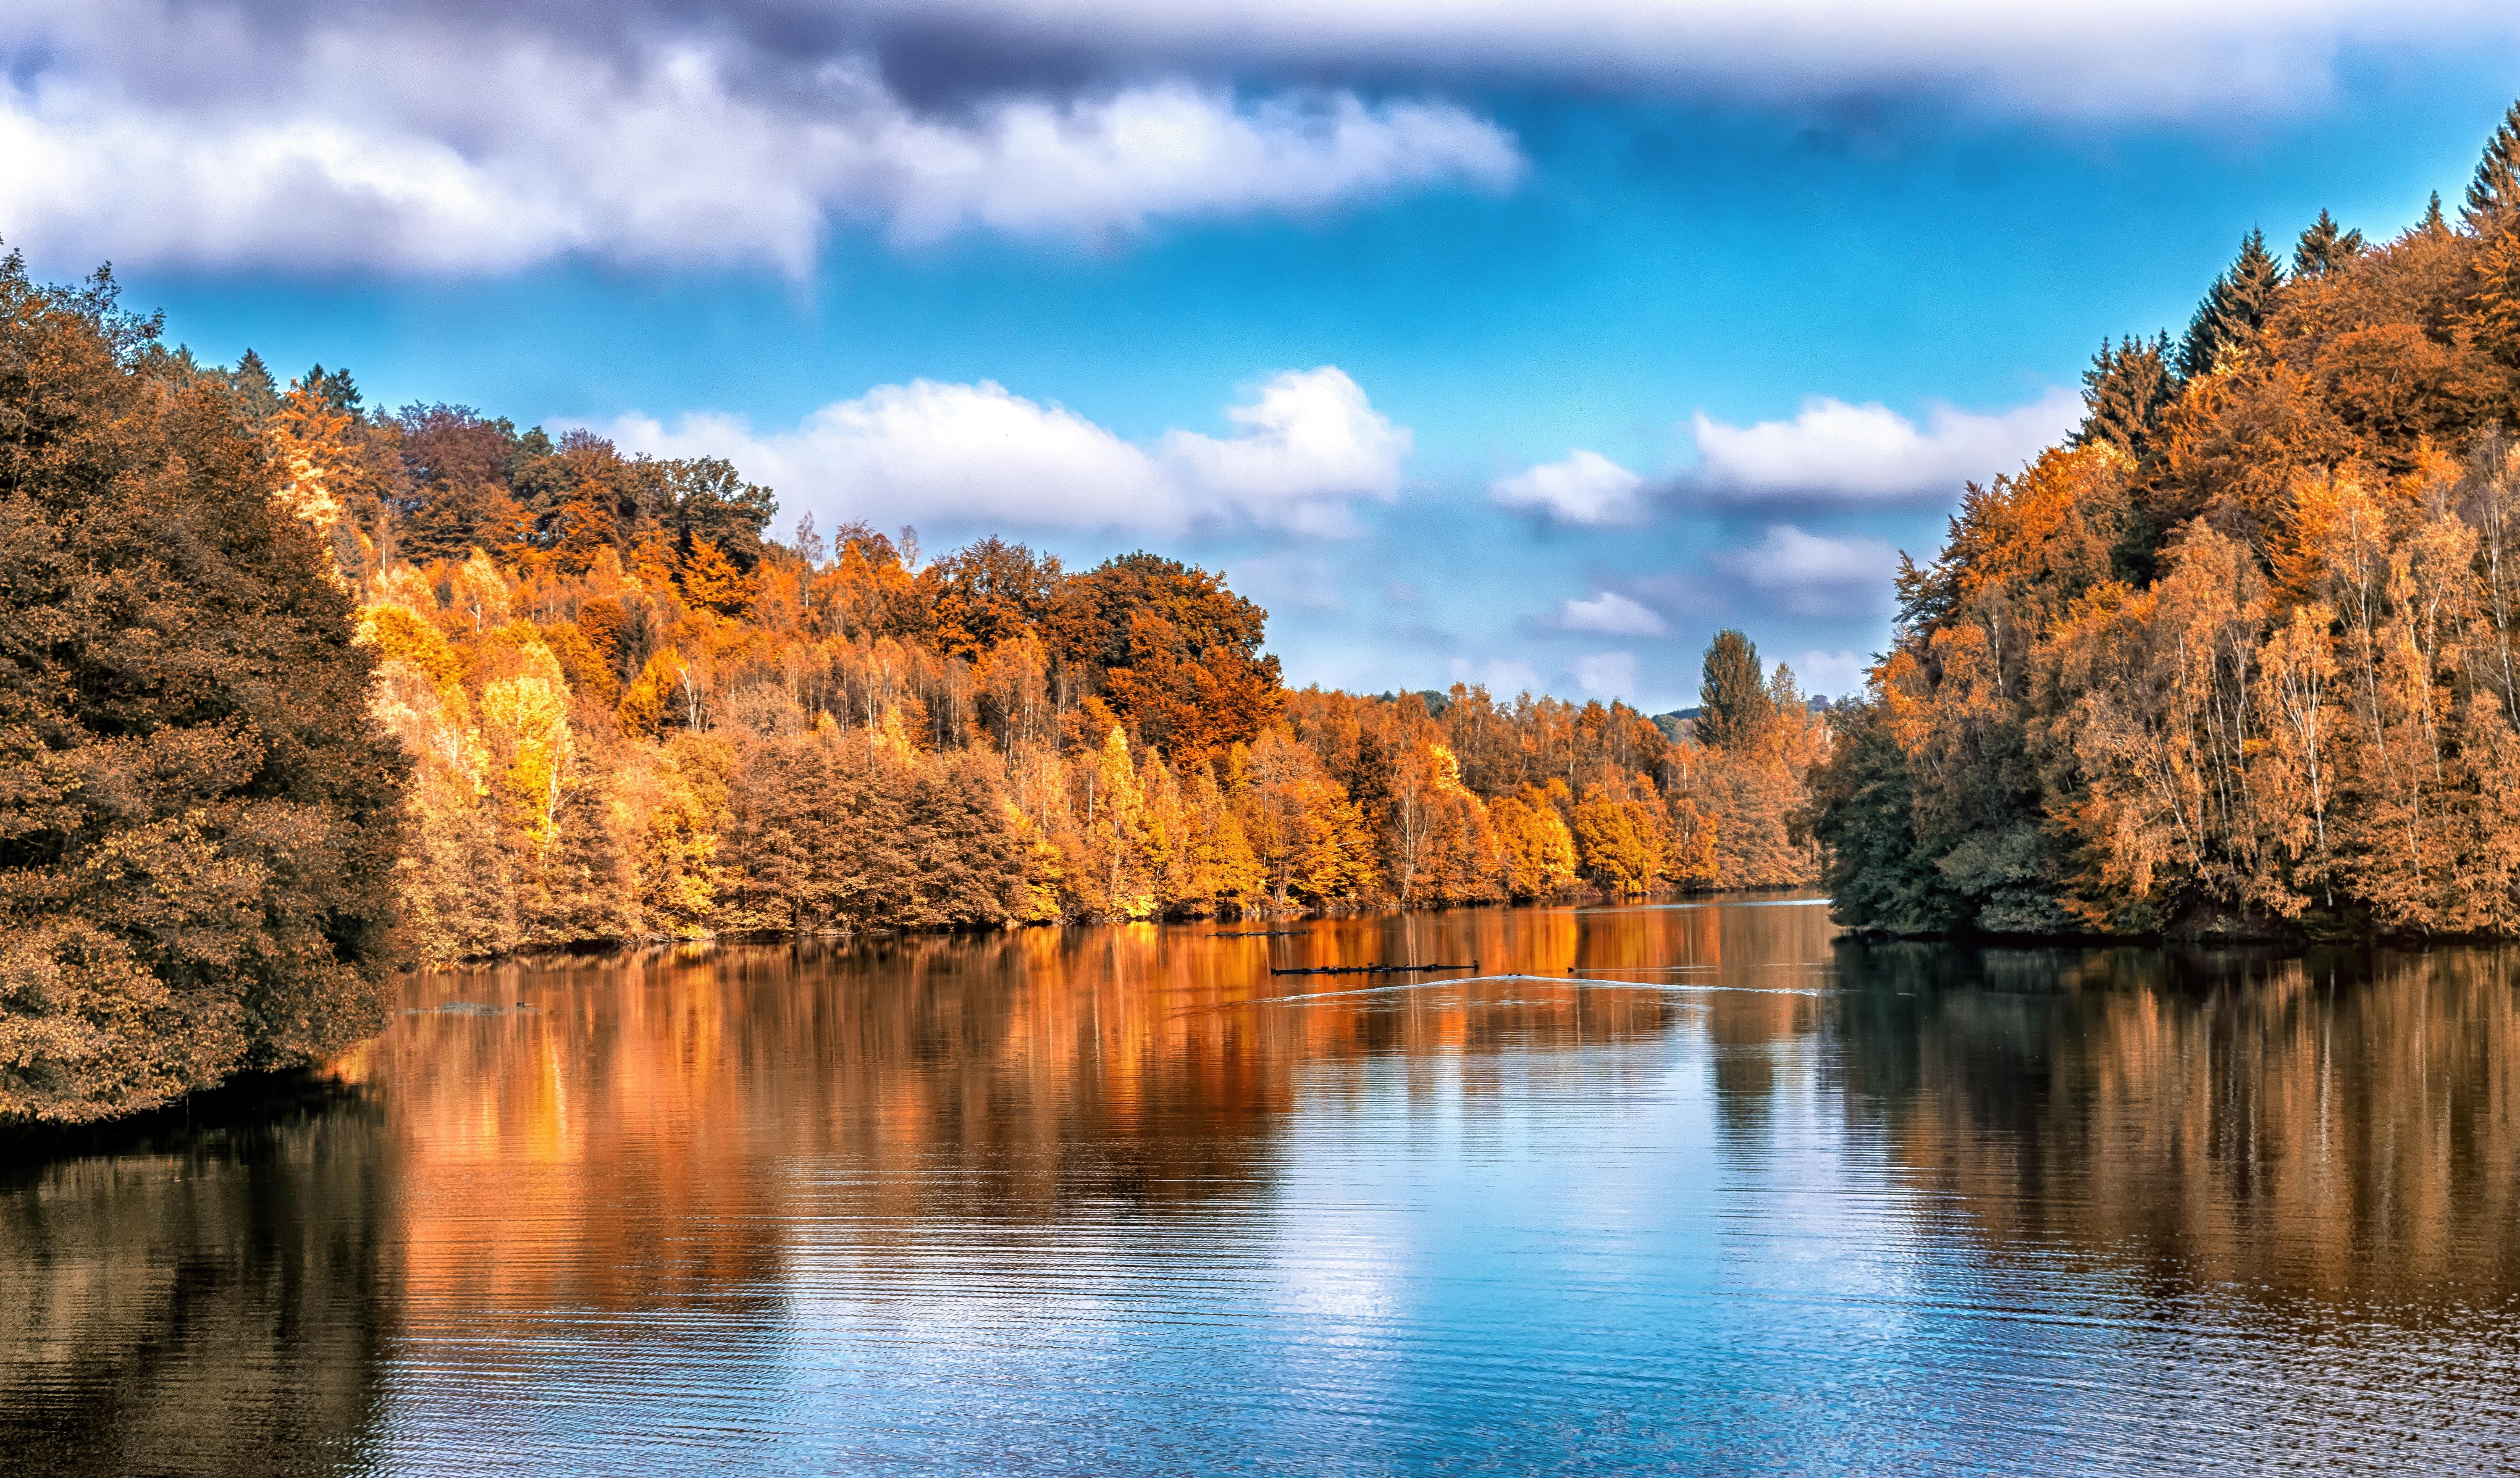 Download wallpaper 6000x3519 autumn, lake, trees, reflection